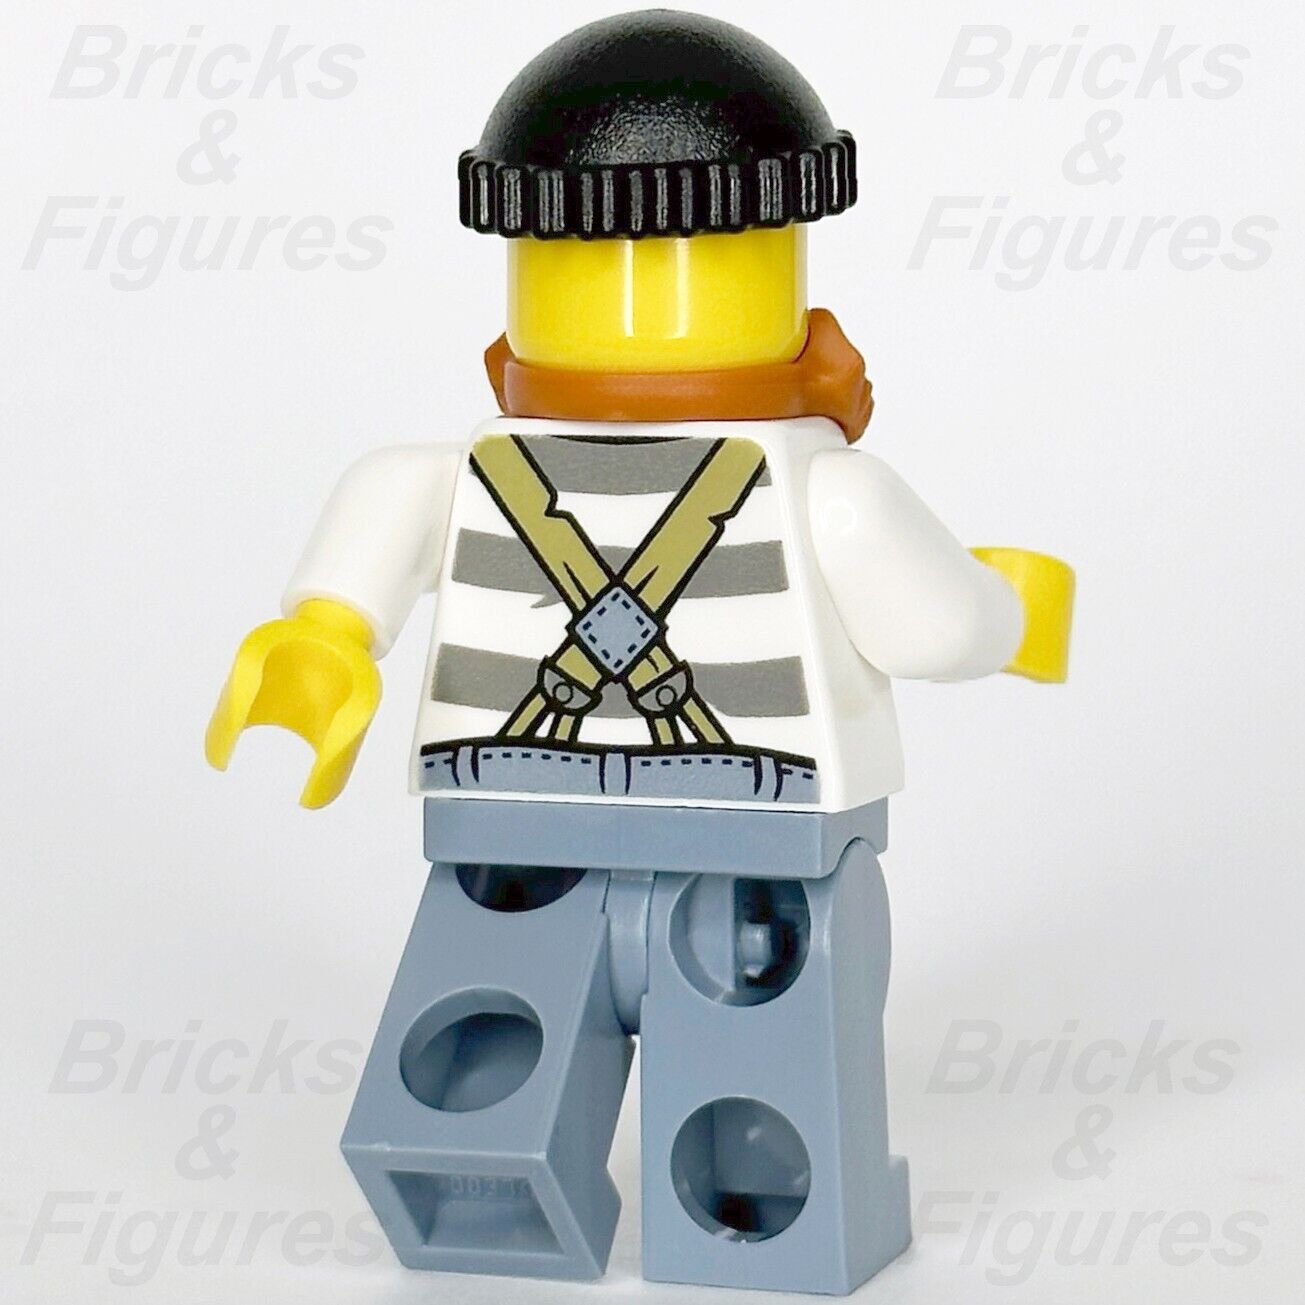 LEGO Town City Crook with Black Knit Cap Minifigure Orange Beard Police  60066